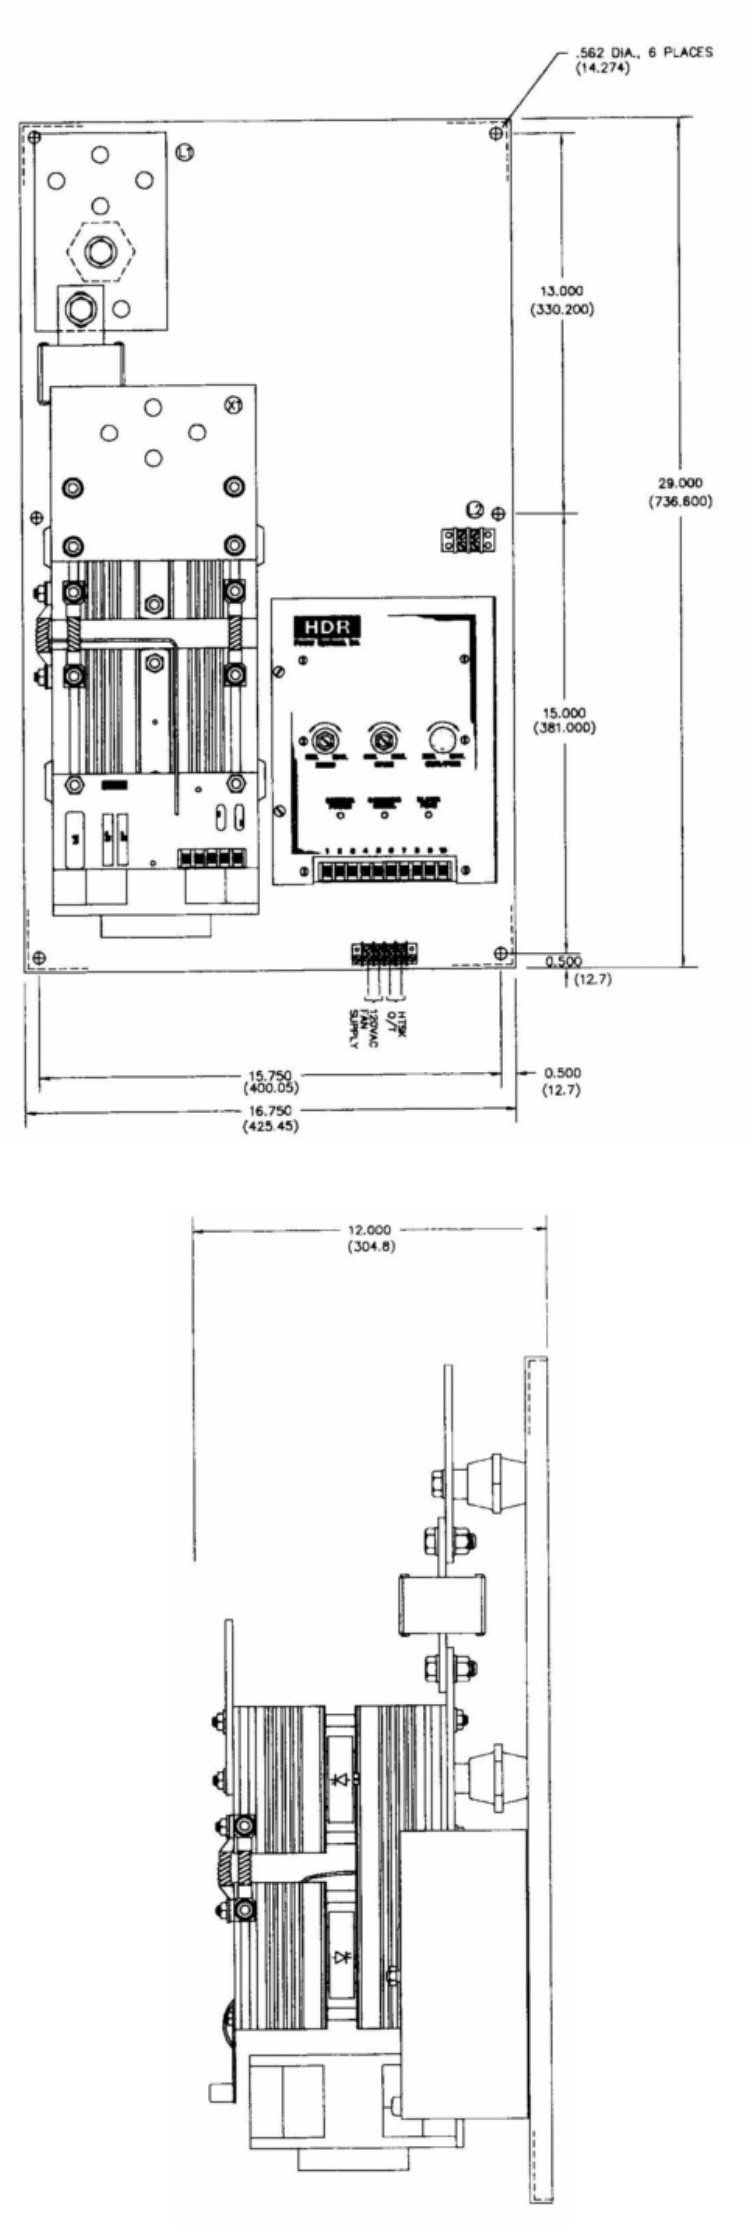 PF1 SCR Power Control Dimensions